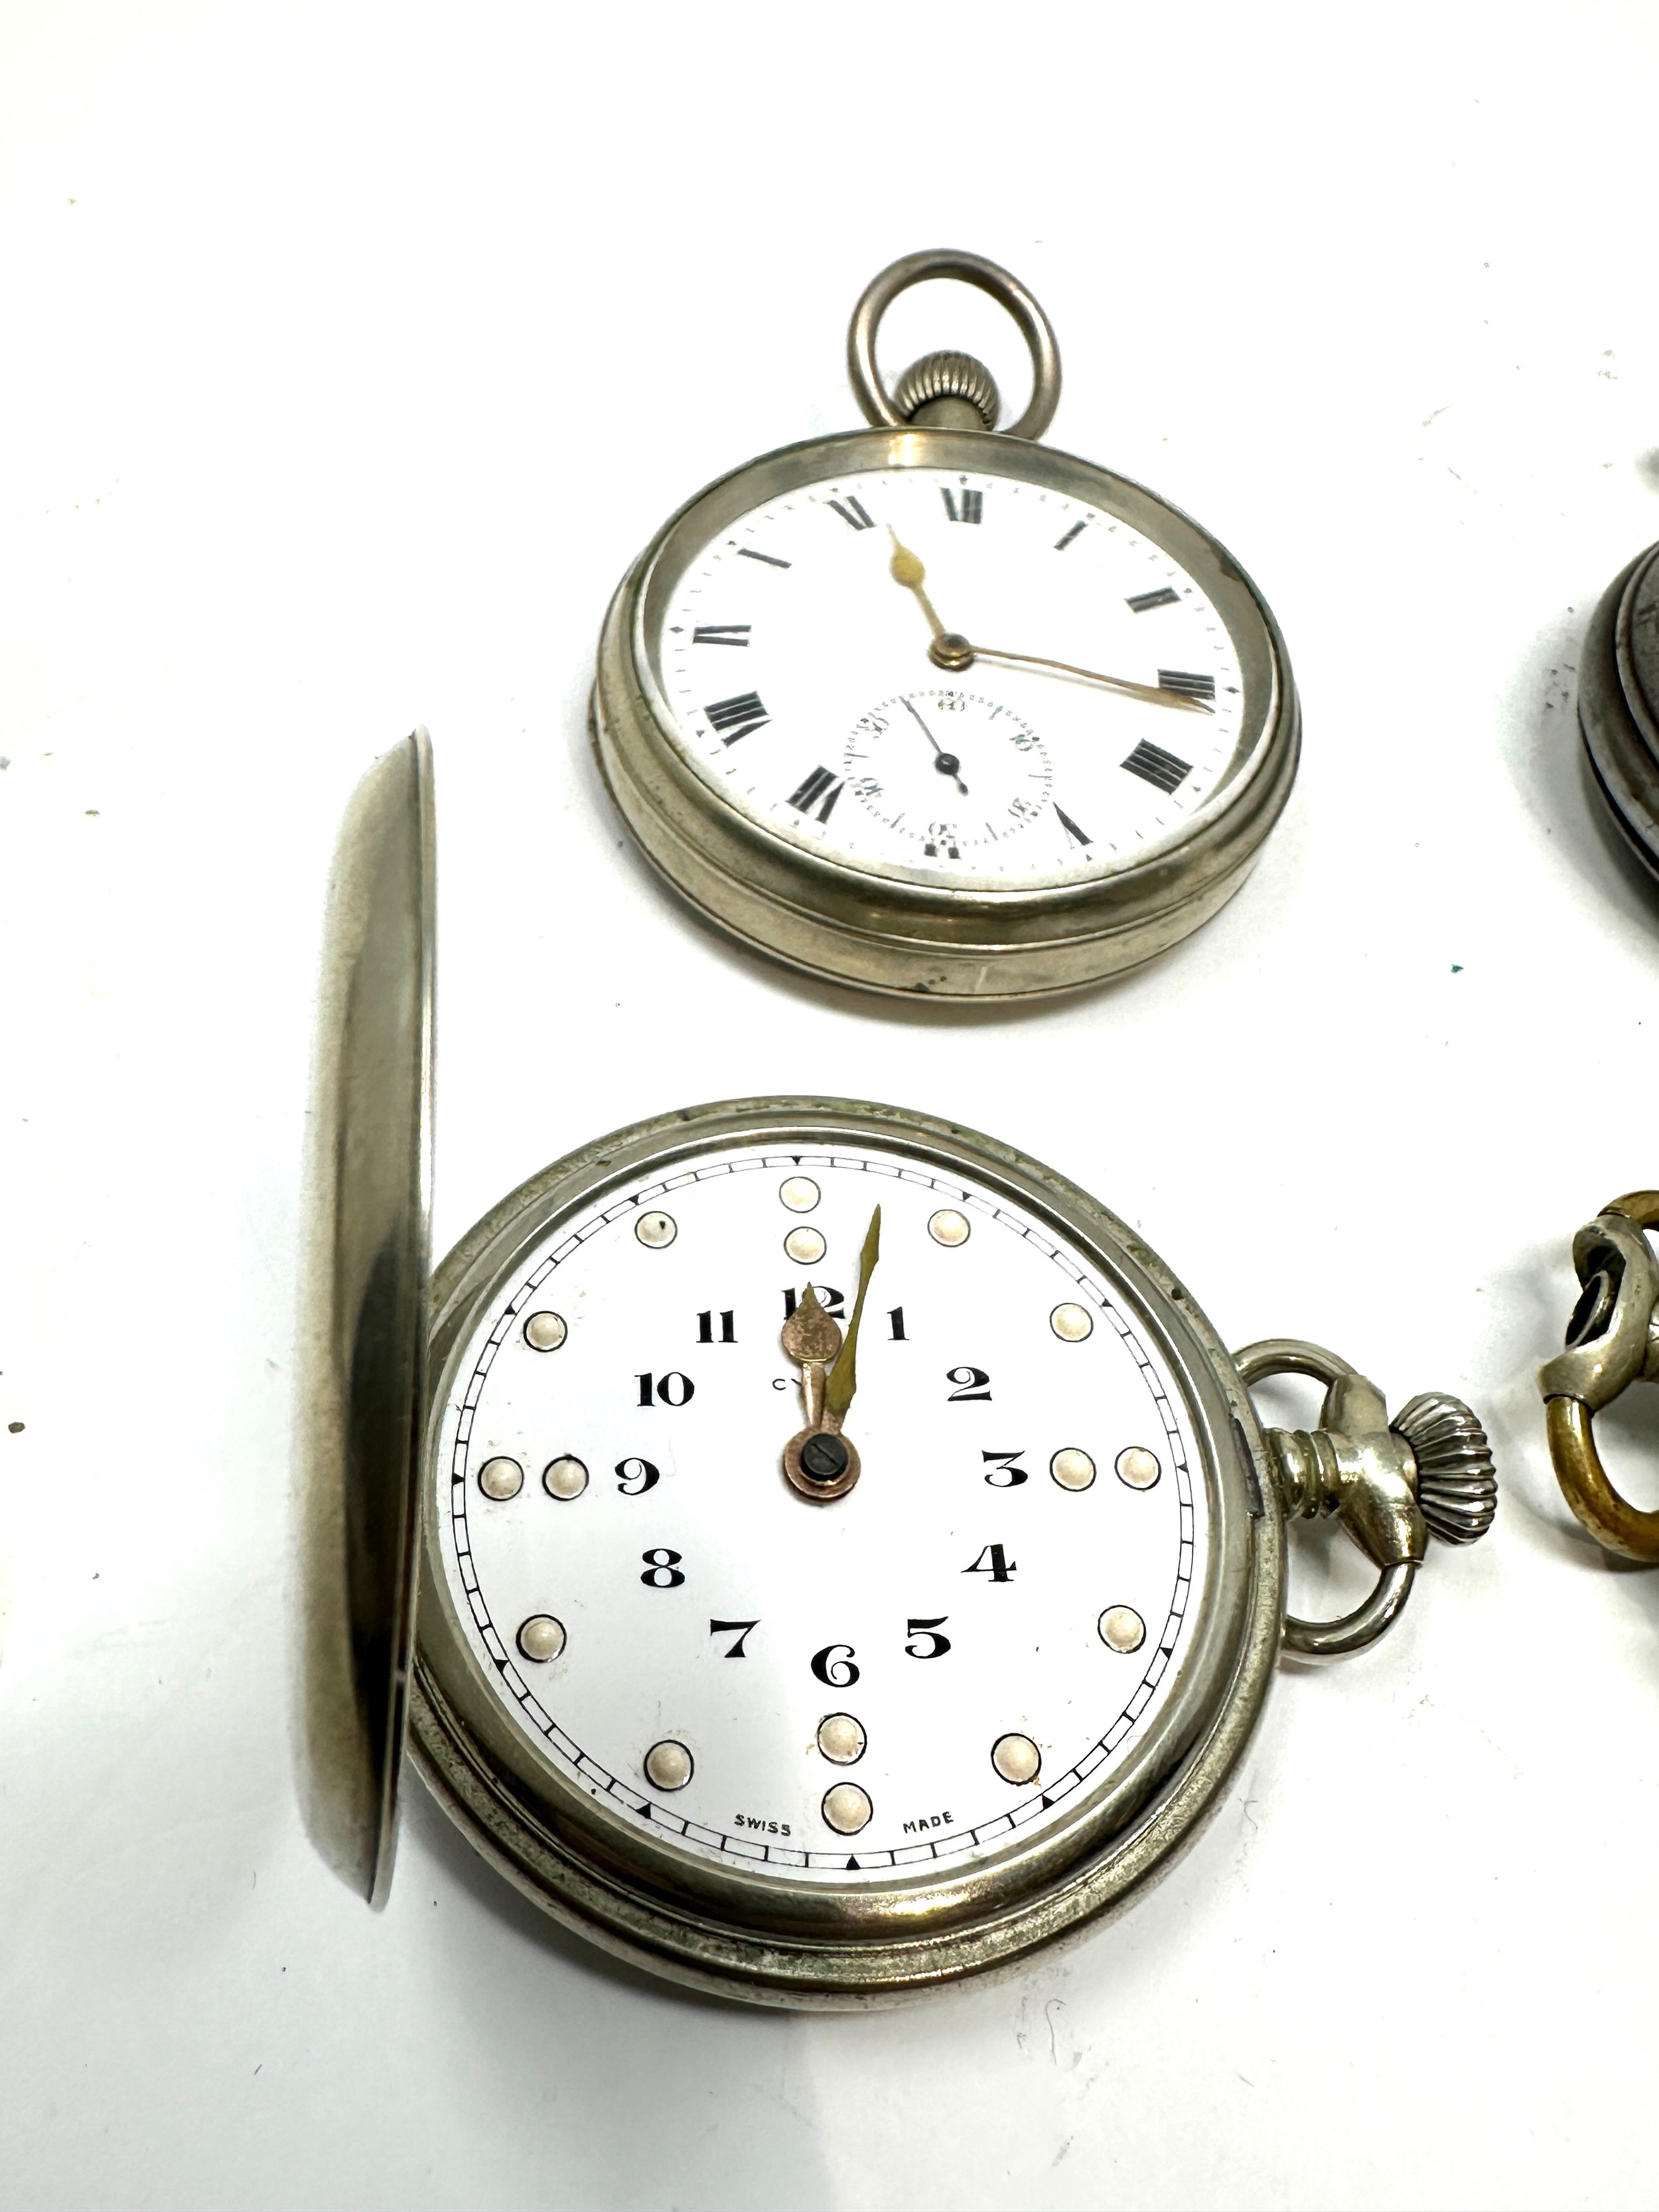 4 Vintage pocket watches cyma brialle & roskopfe etc spares or repair - Image 2 of 6